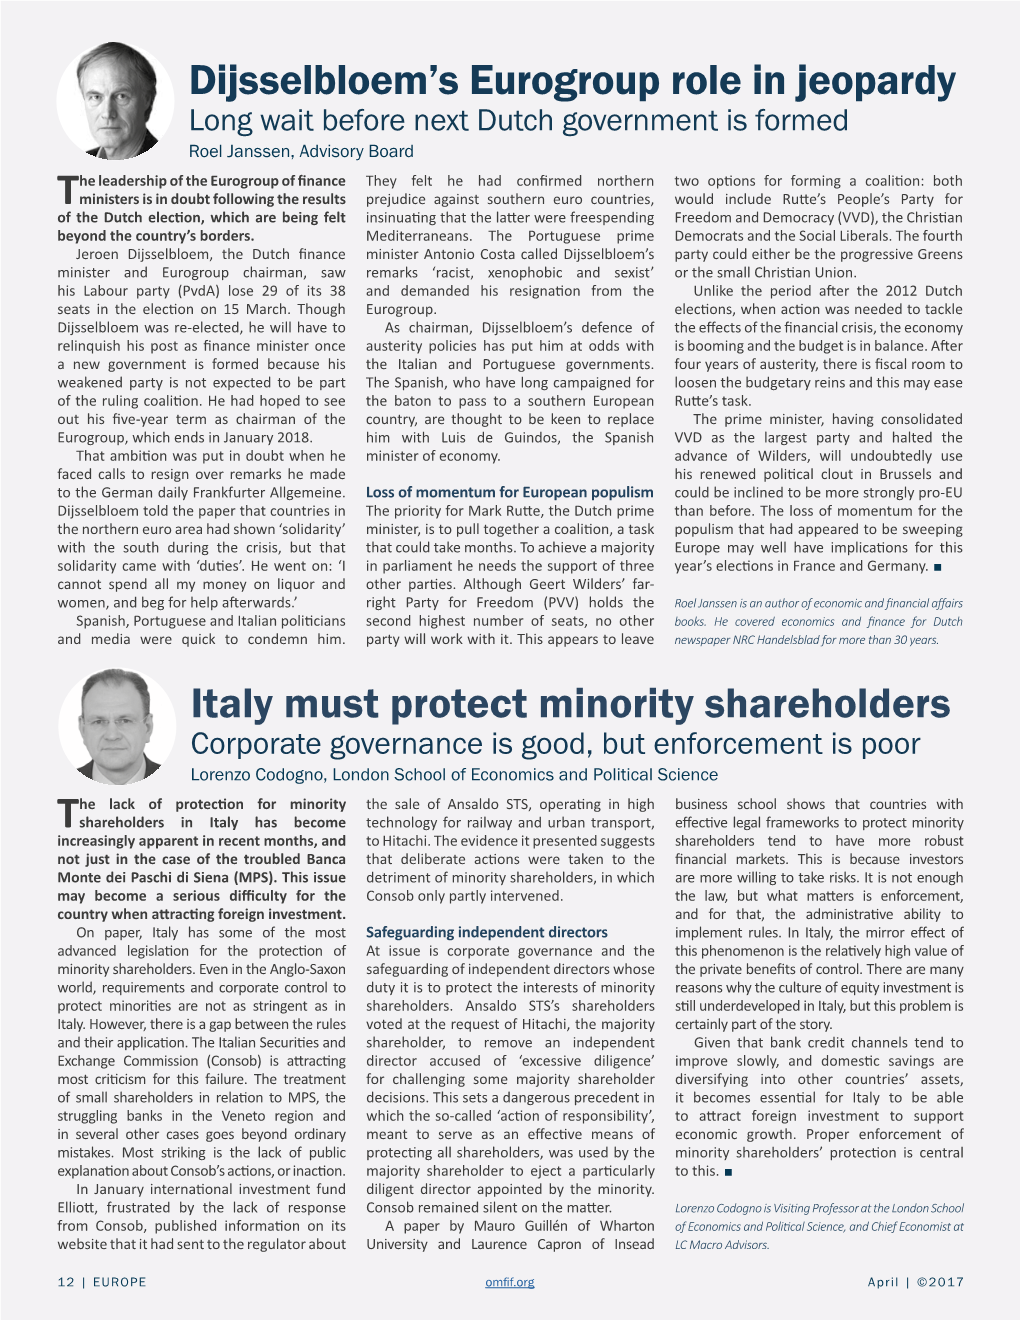 Dijsselbloem's Eurogroup Role in Jeopardy Italy Must Protect Minority